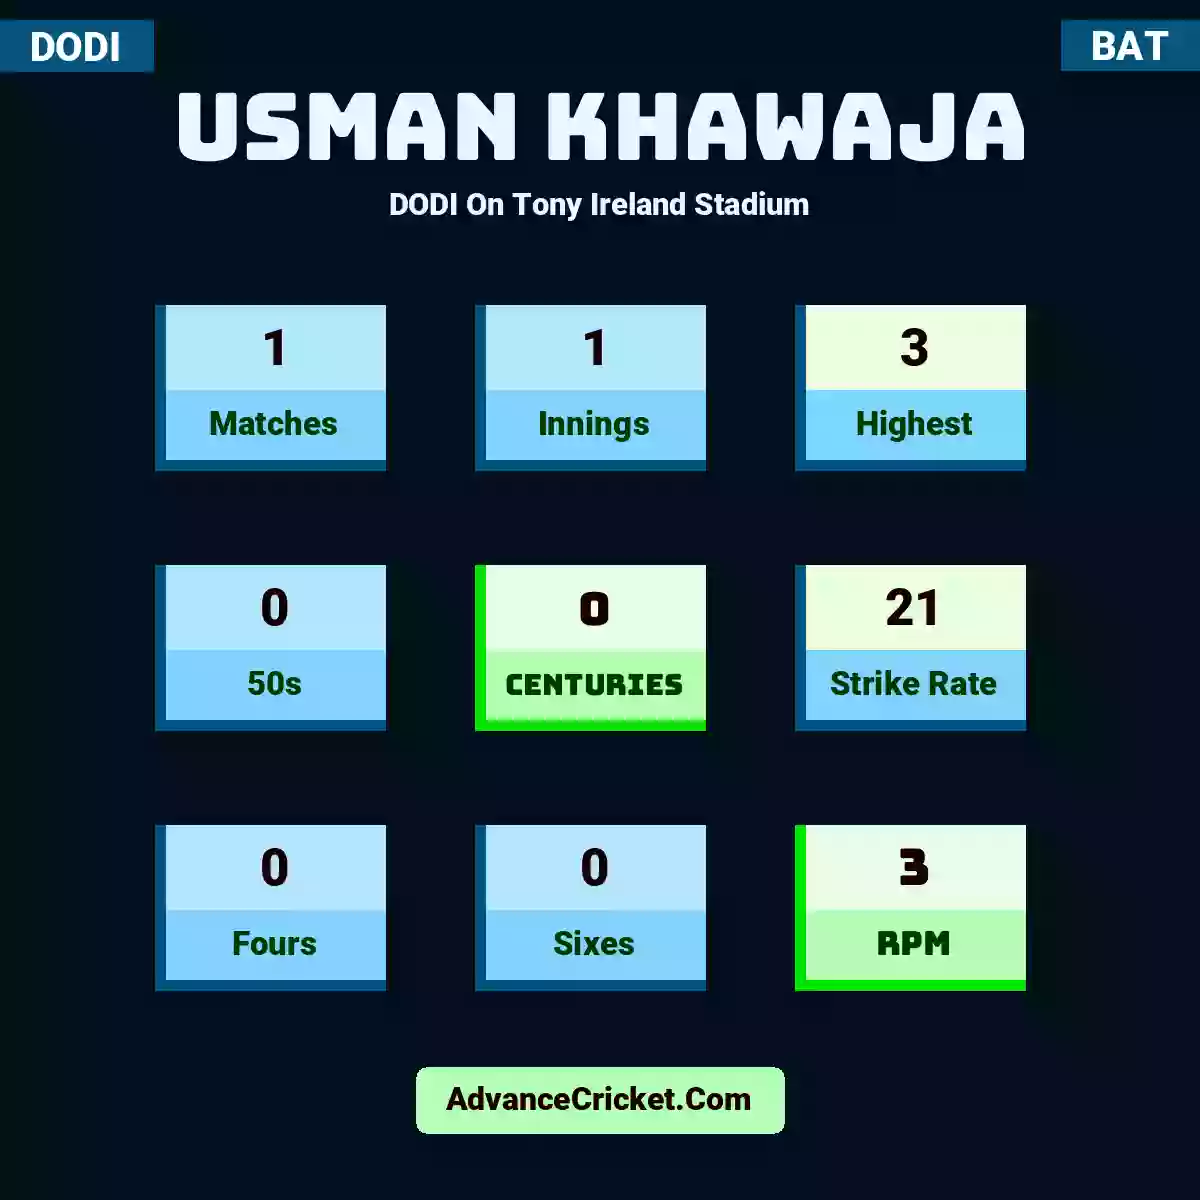 Usman Khawaja DODI  On Tony Ireland Stadium, Usman Khawaja played 1 matches, scored 3 runs as highest, 0 half-centuries, and 0 centuries, with a strike rate of 21. U.Khawaja hit 0 fours and 0 sixes, with an RPM of 3.